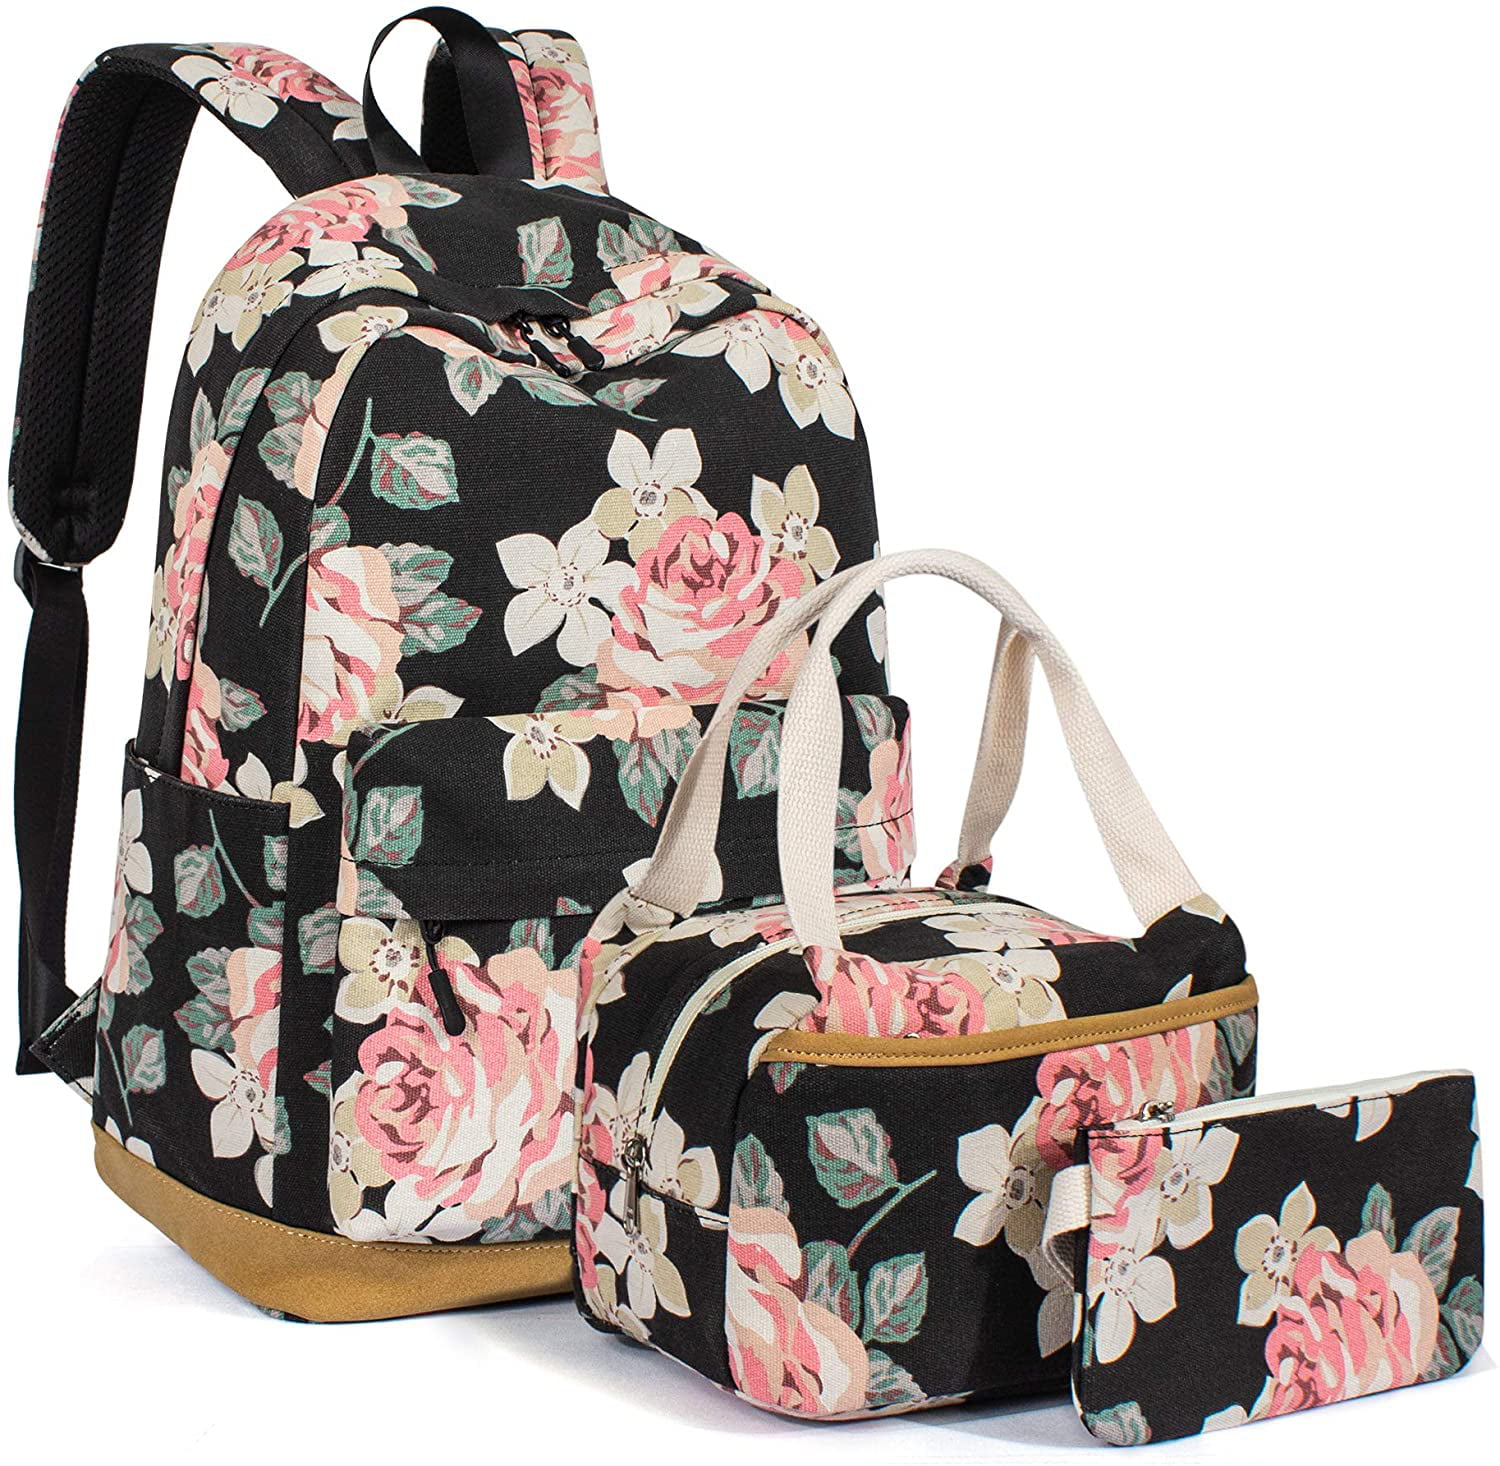 Leaper Girls Floral School Backpack Cute Daypack Bookbag Lunch Bag Purse Black Walmart Canada